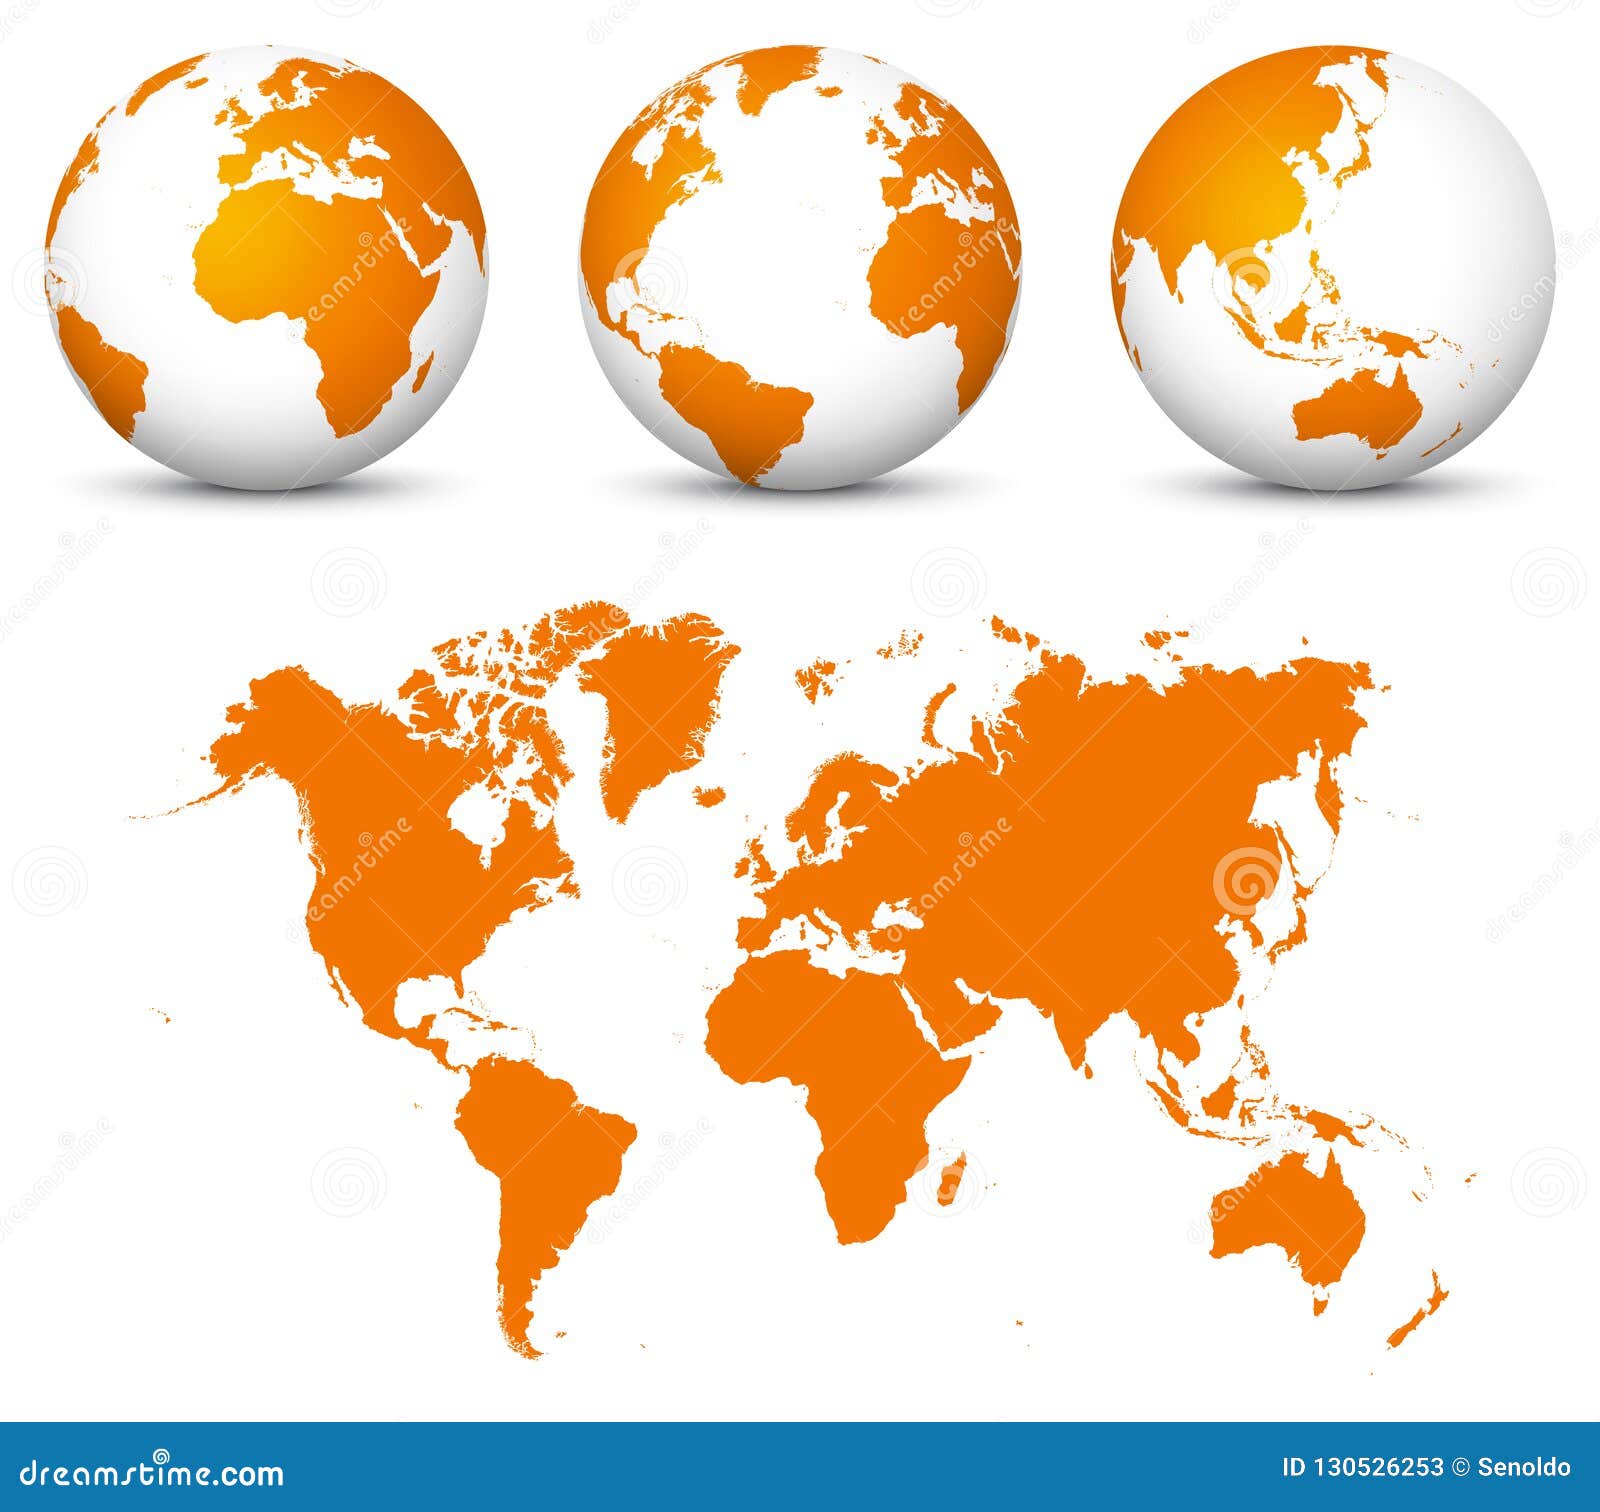 World Map Maps Vector Hd Images World Map Orange Europe America ...